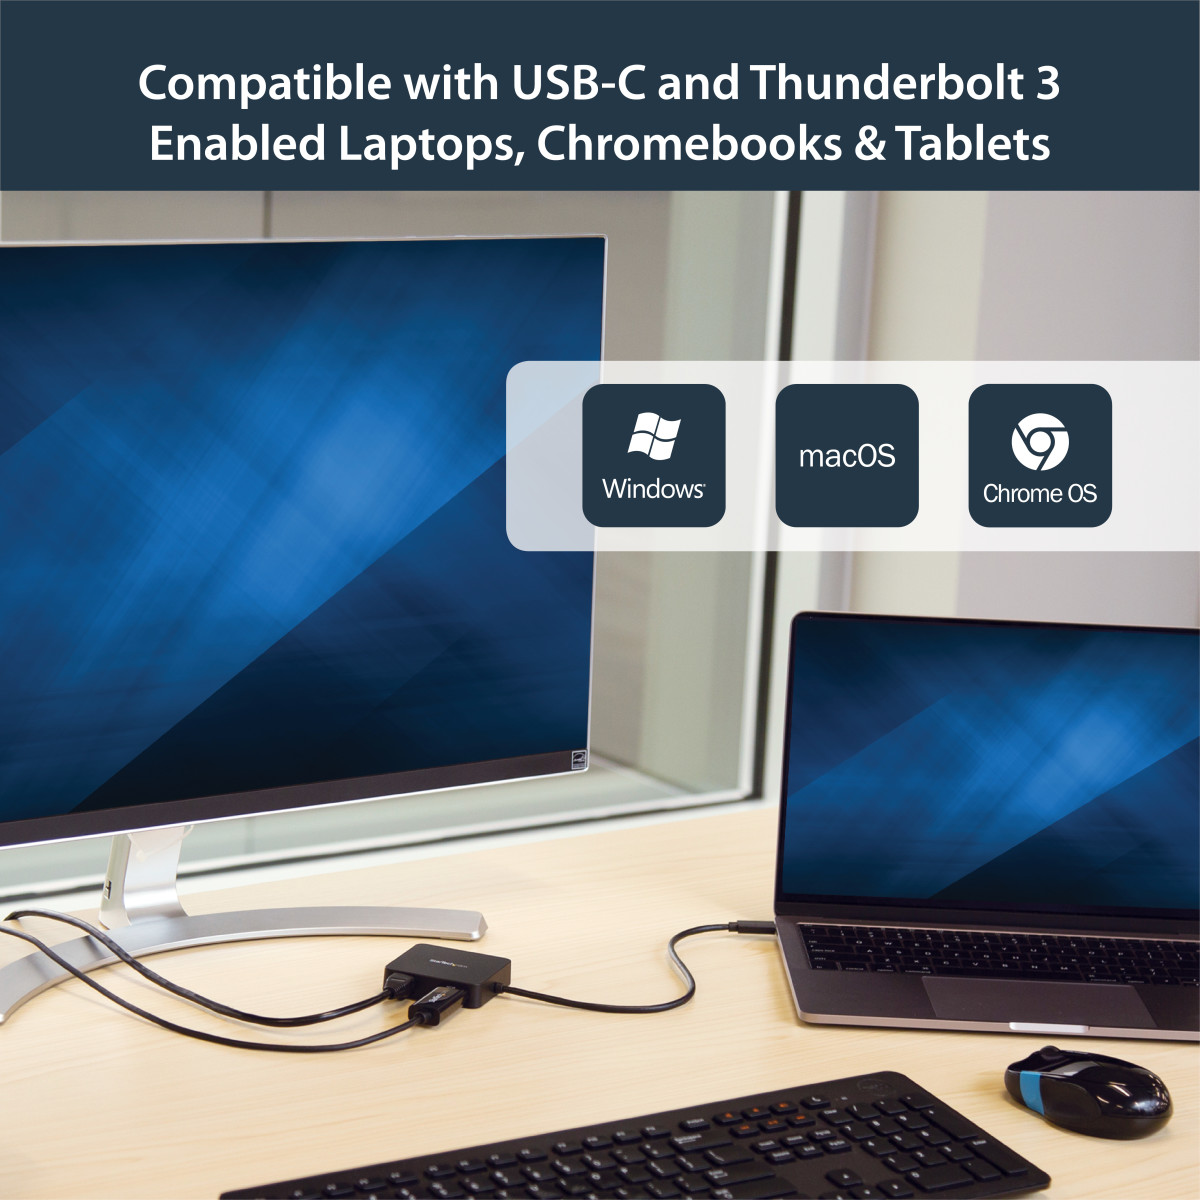 USB C Multiport Adapter HDMI USB 3.0 Gb